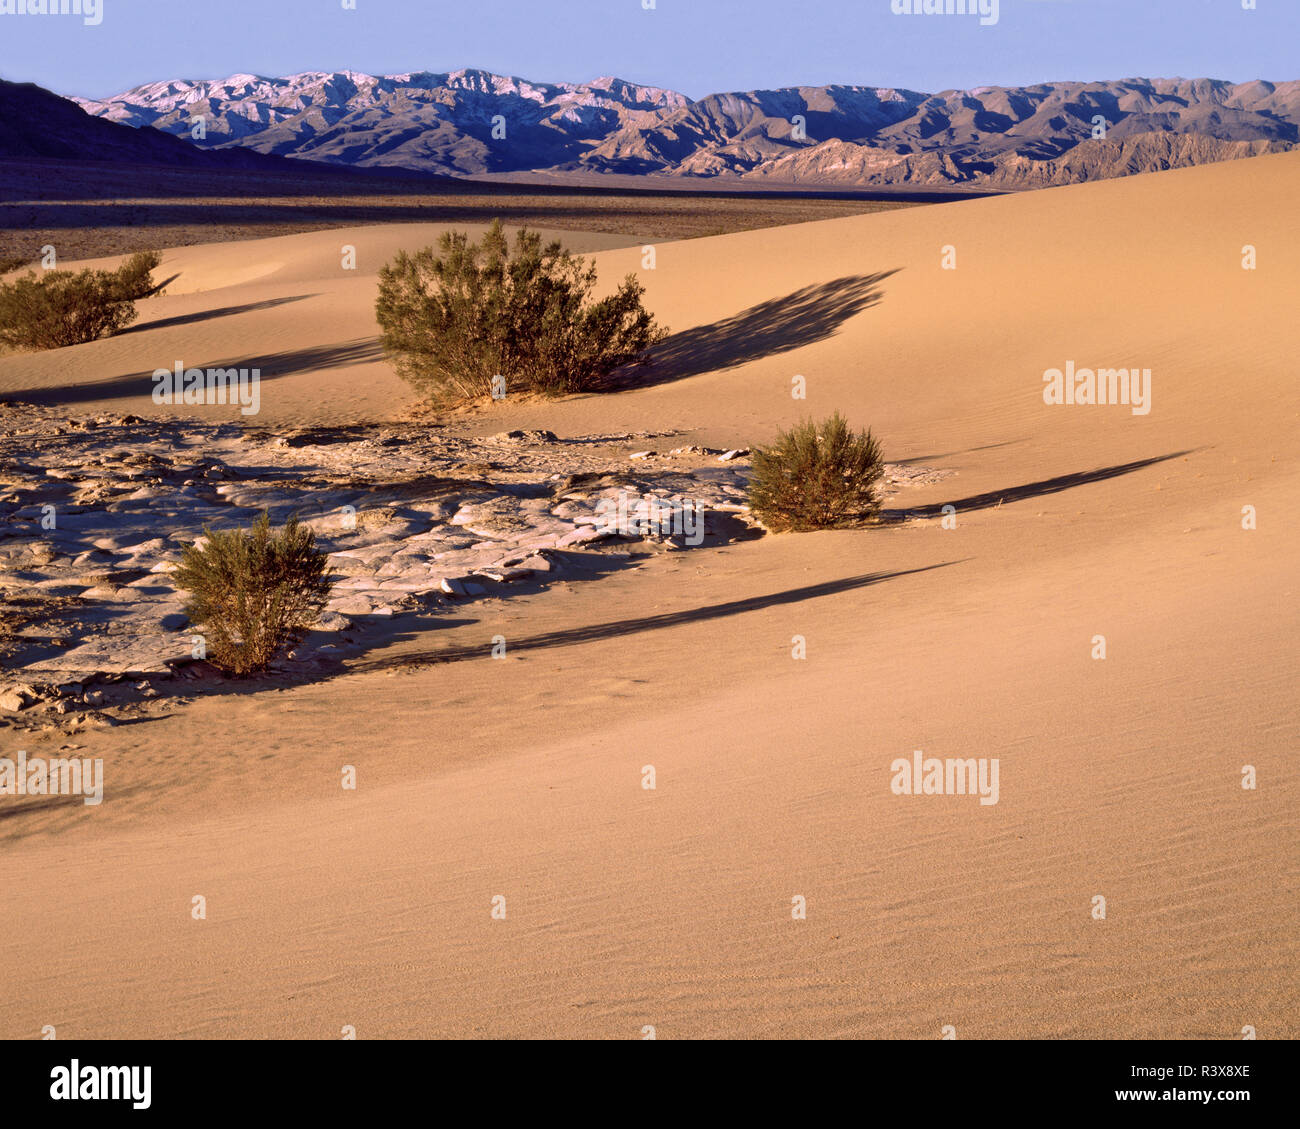 USA, California, Death Valley National Park. Desert landscape. Stock Photo